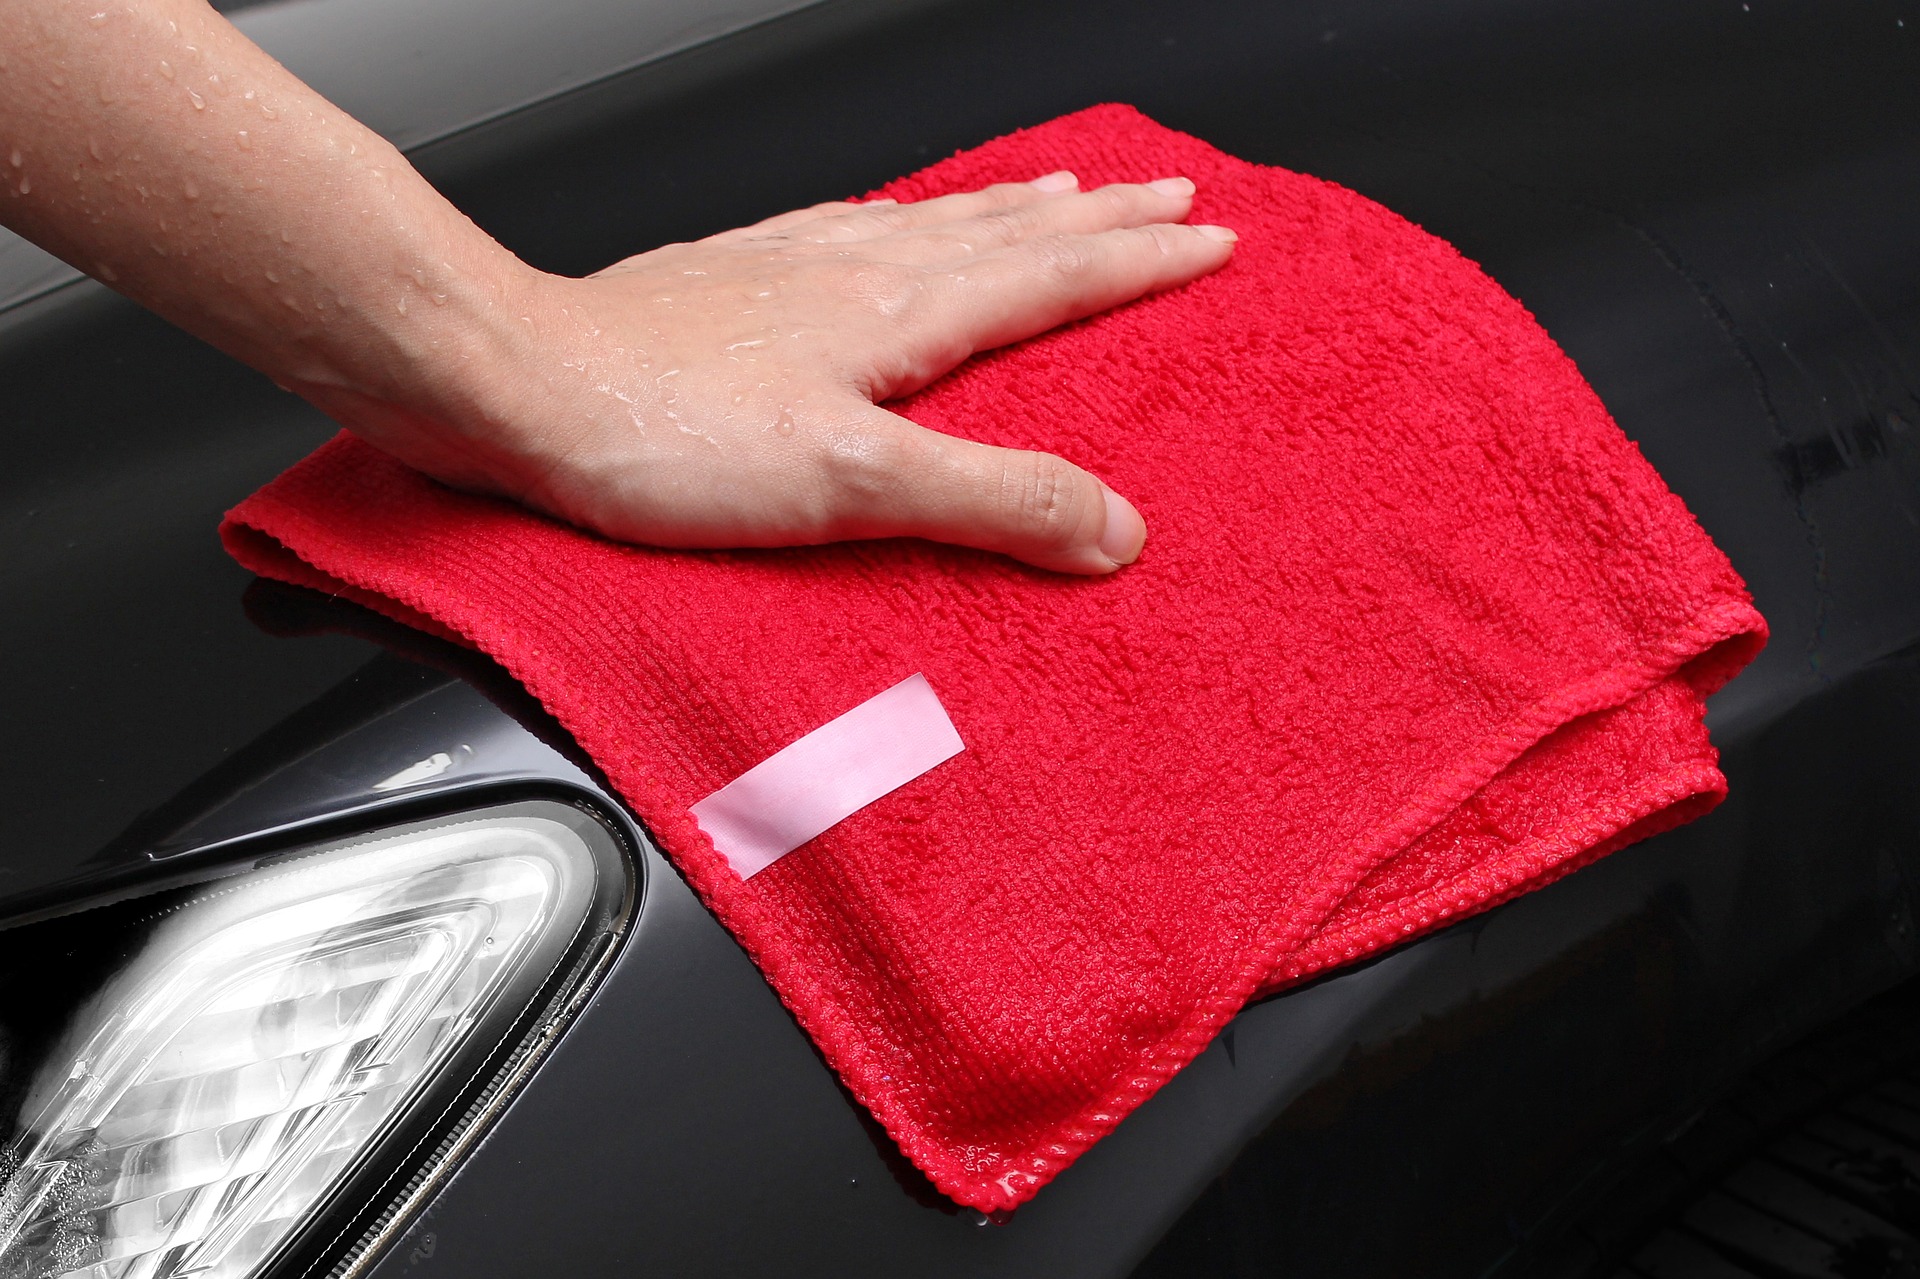 Red towel drying a black car Decatur Autowash good touchfree wash